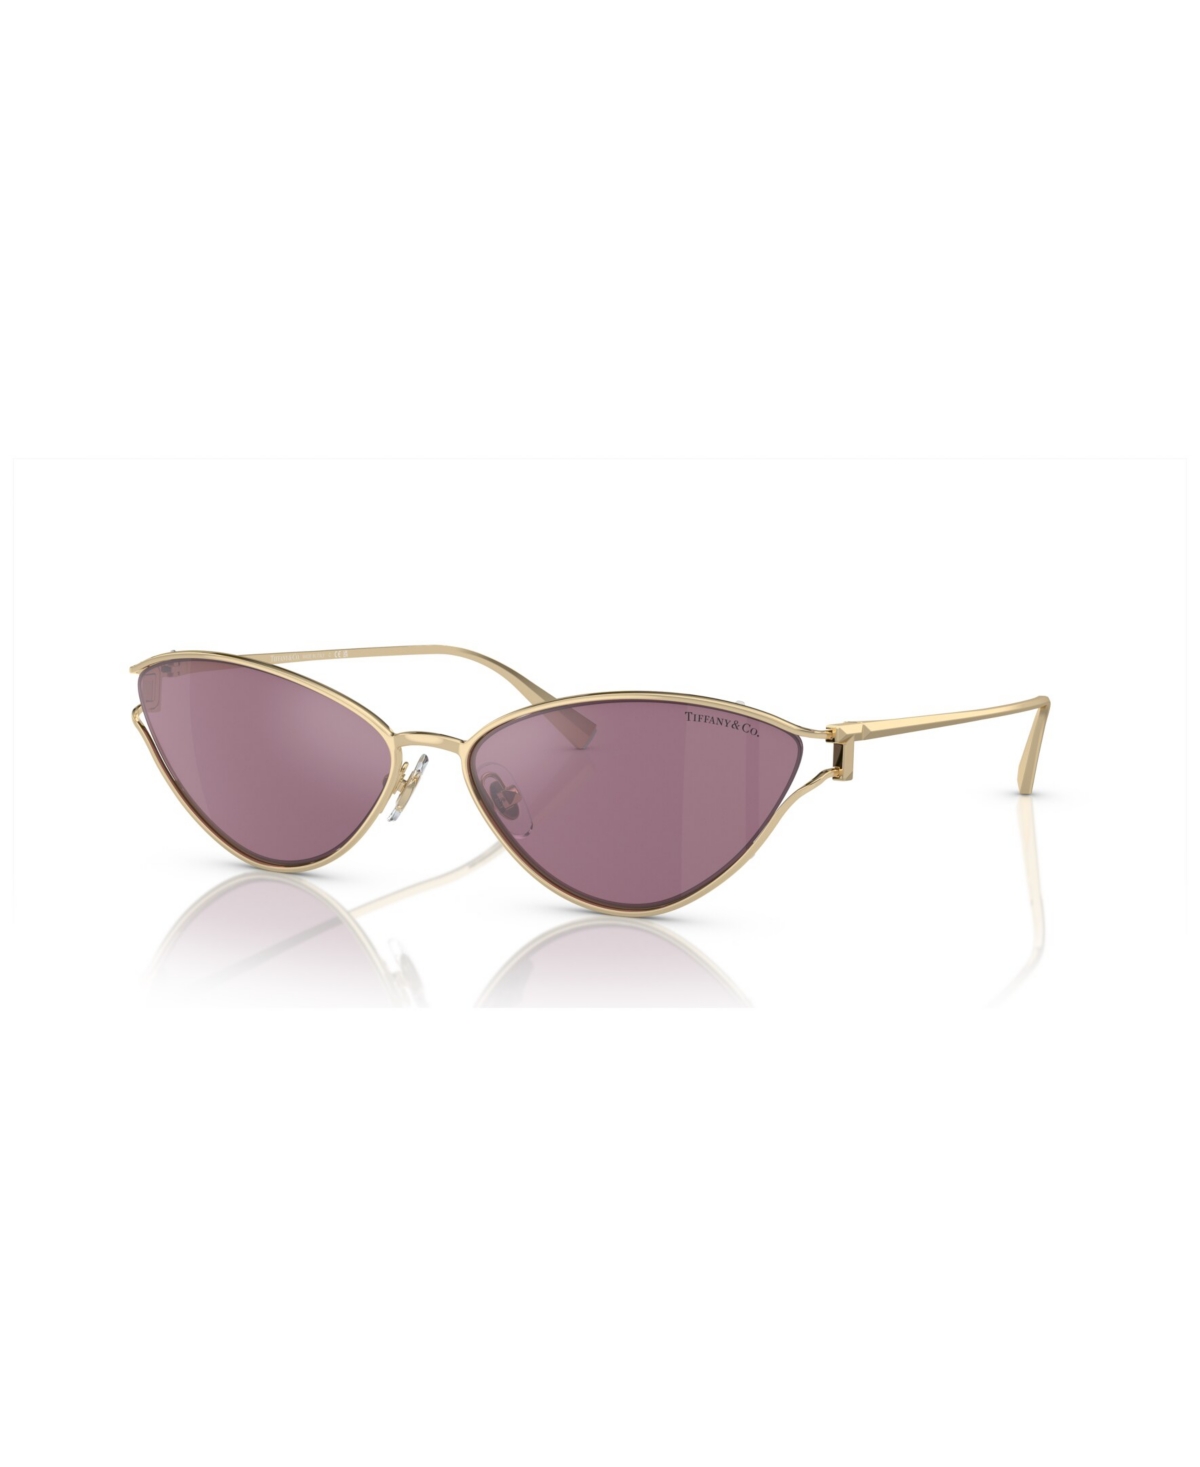 Tiffany & Co Women's Sunglasses, Gradient Tf3095 In Pale Gold